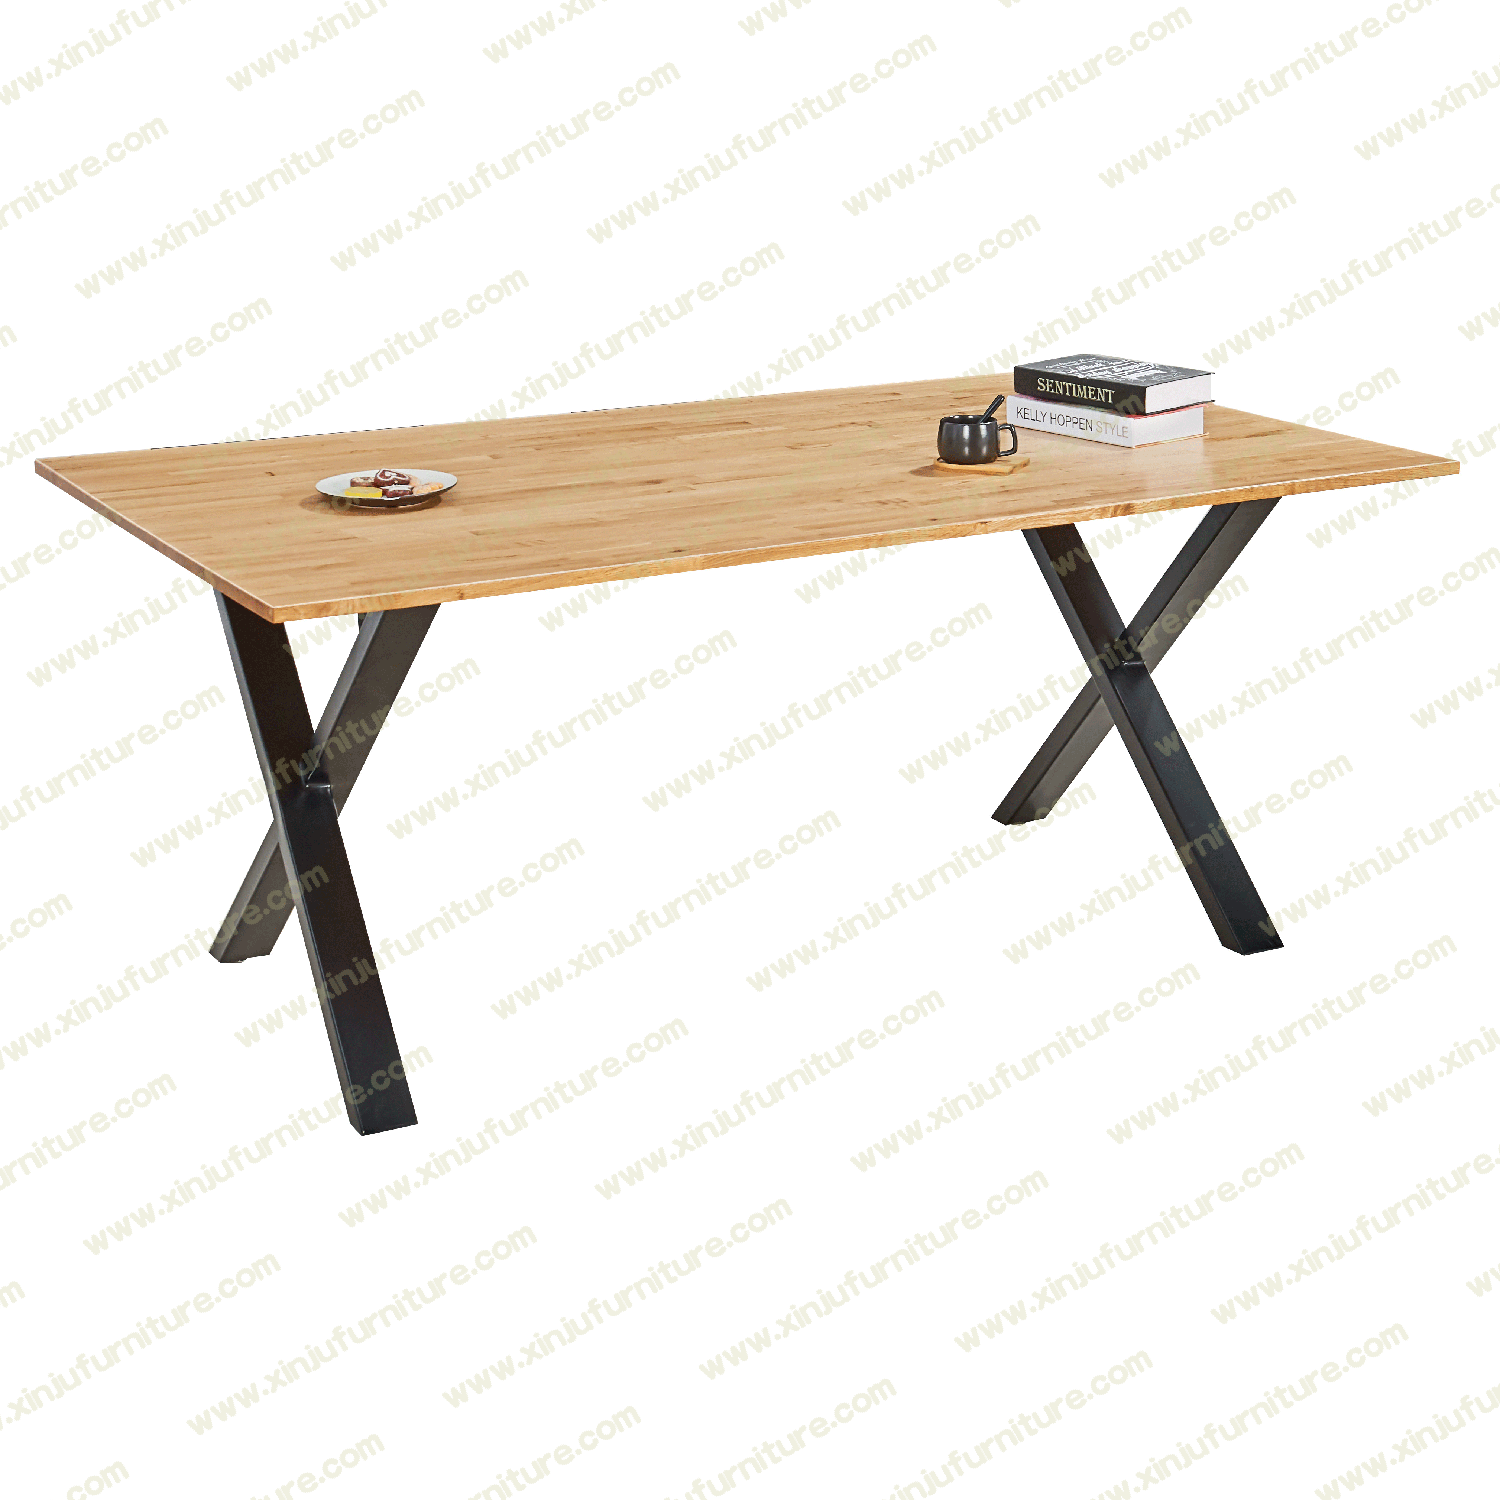 Simple wood grain dining table